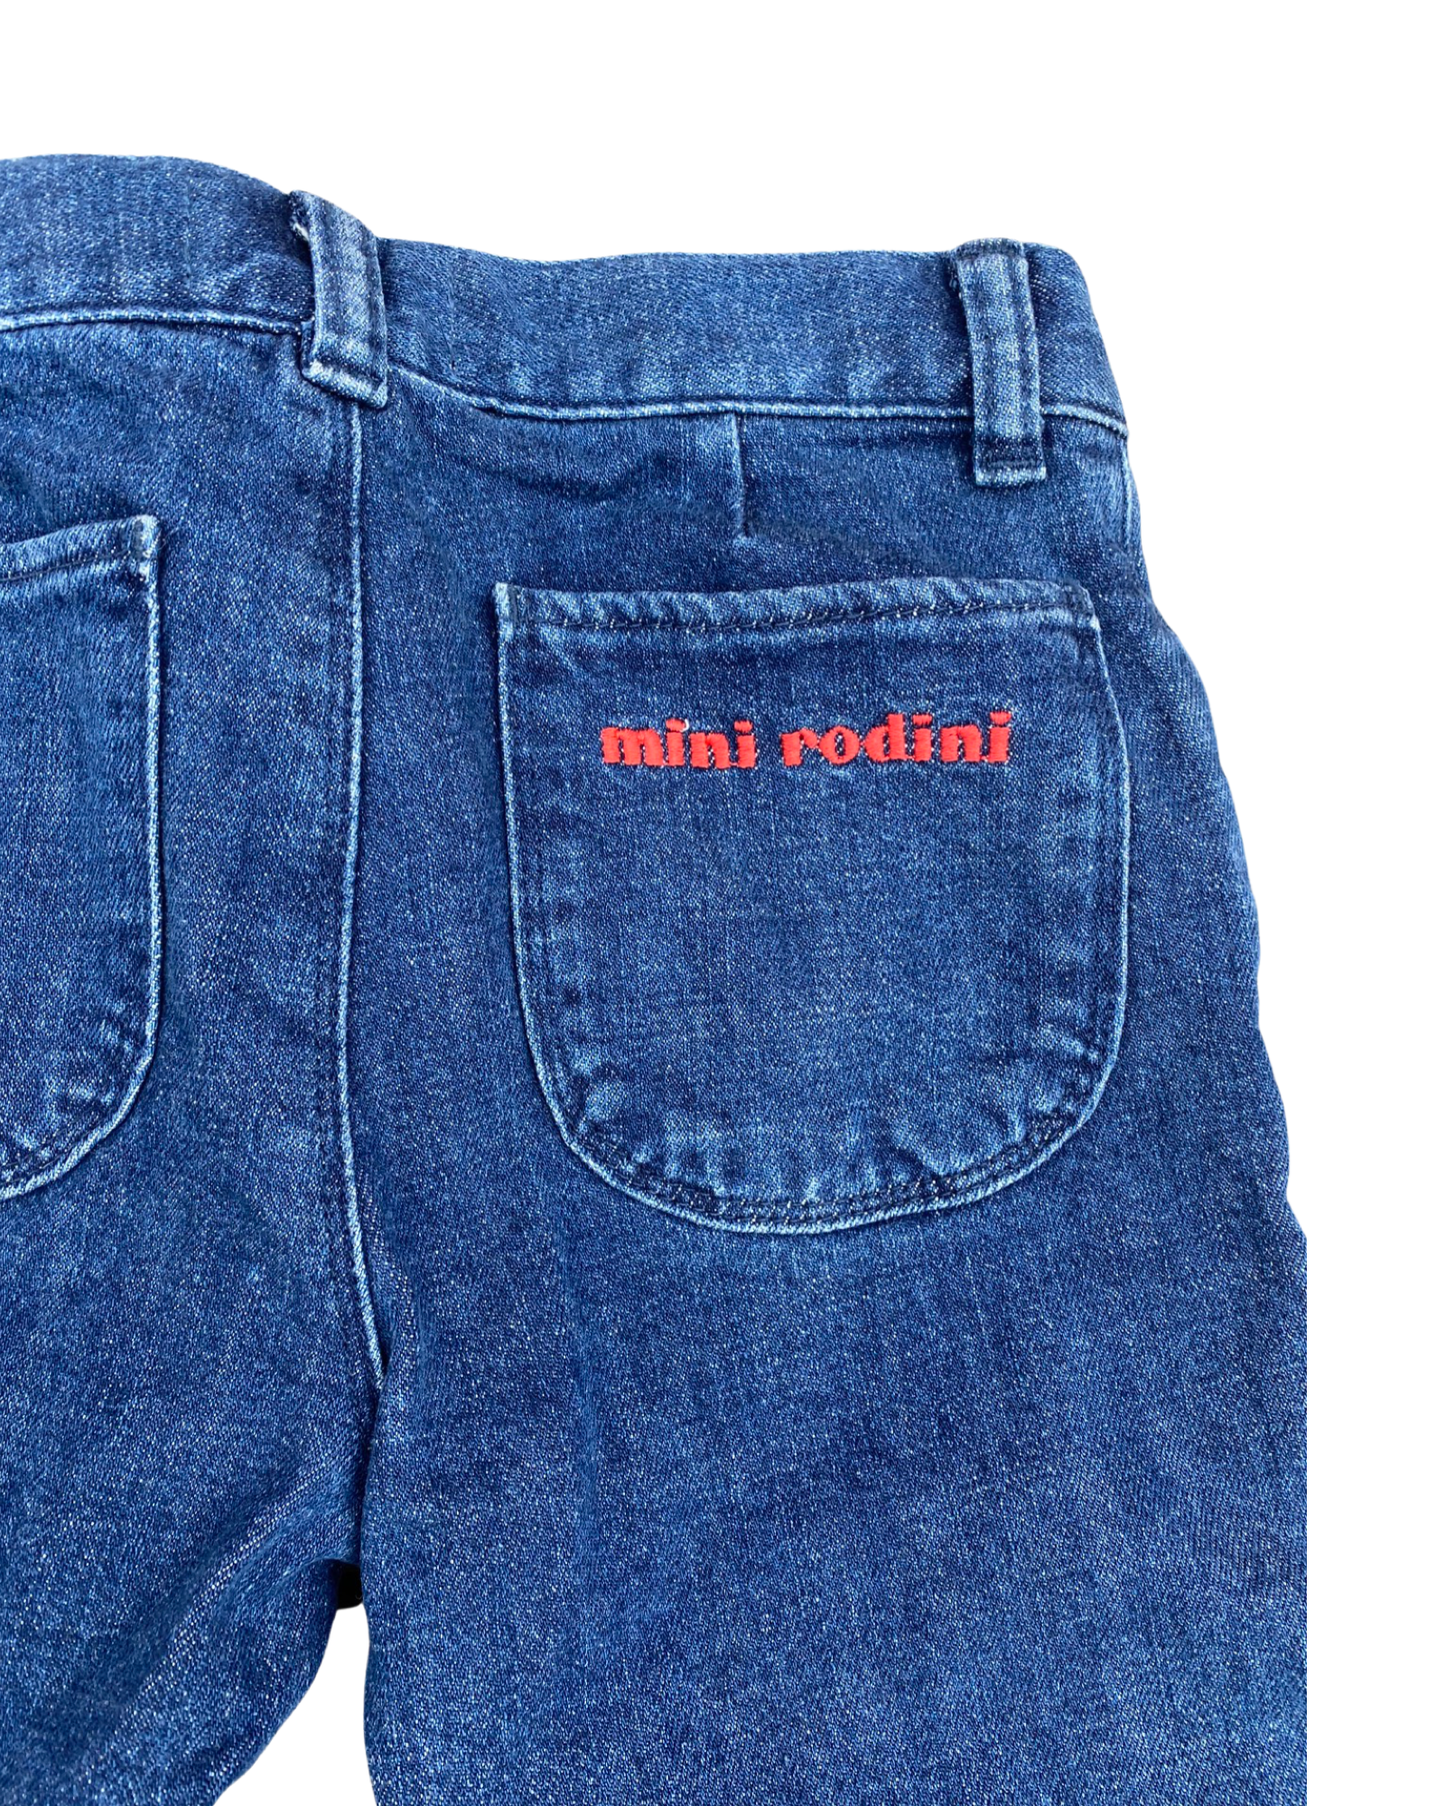 Mini Rodini scorpio denim jeans (3-5yrs)